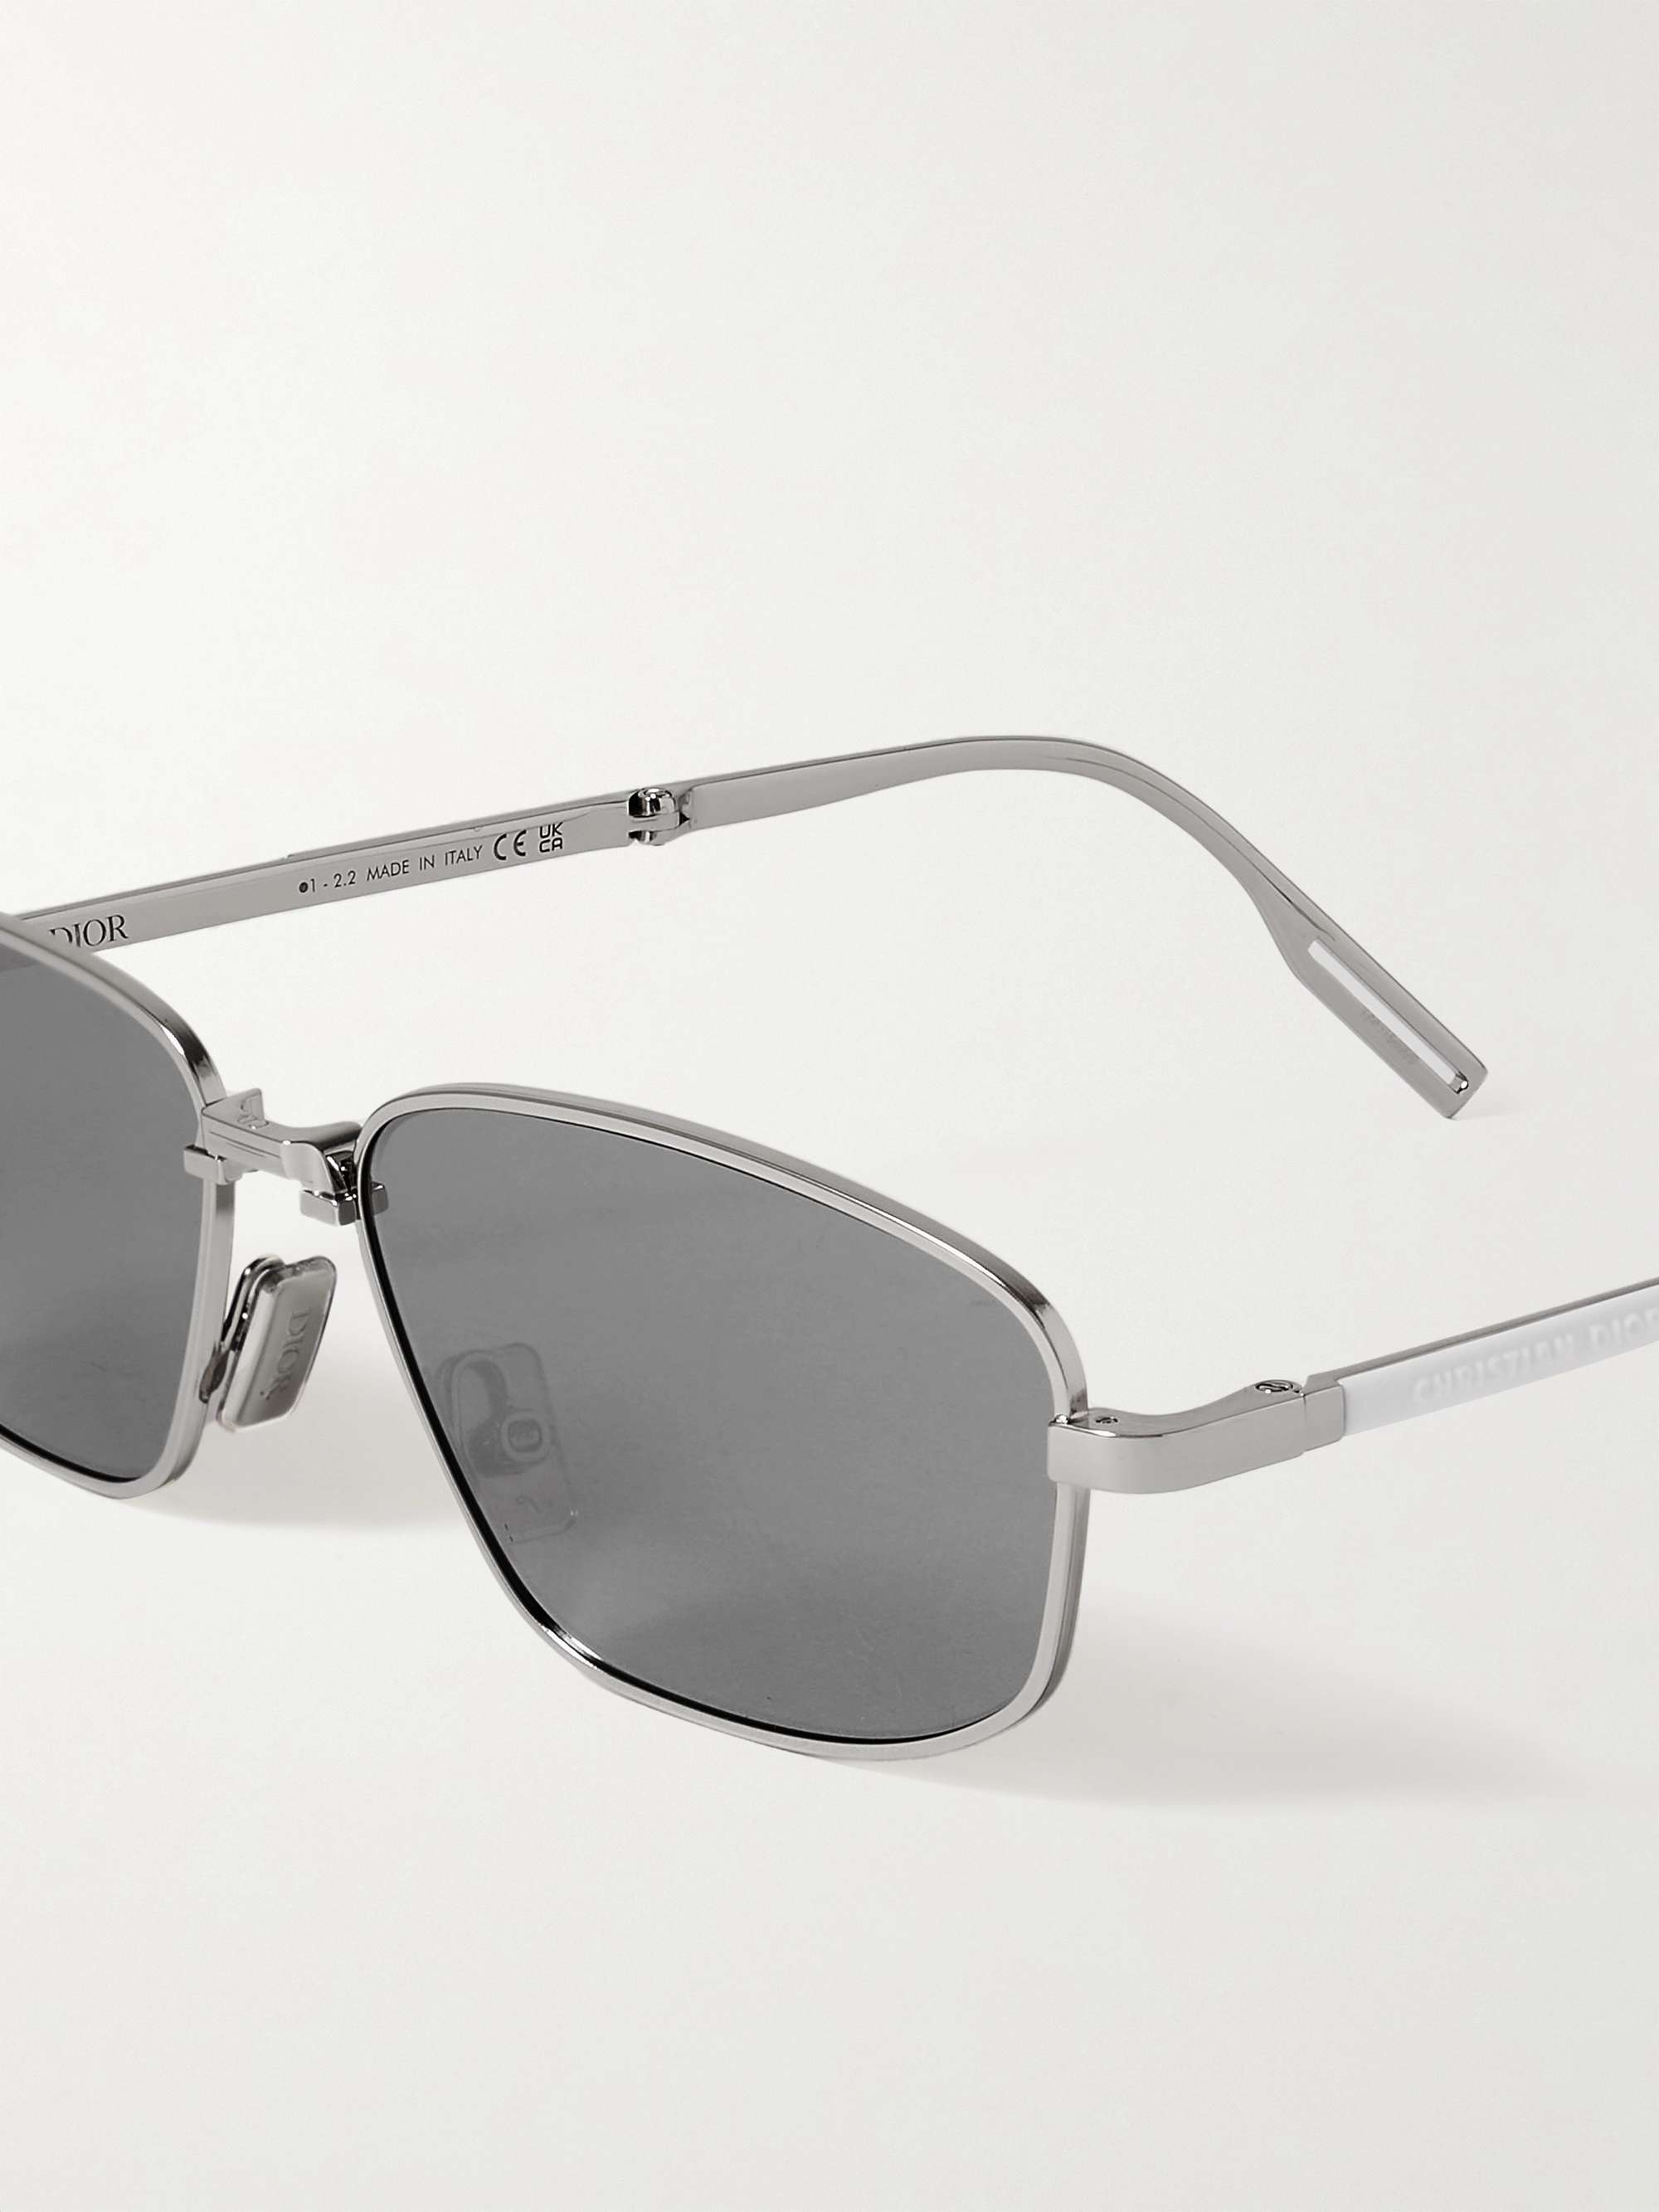 DIOR EYEWEAR Dior90 S1U Rectangular-Frame Silver-Tone Sunglasses